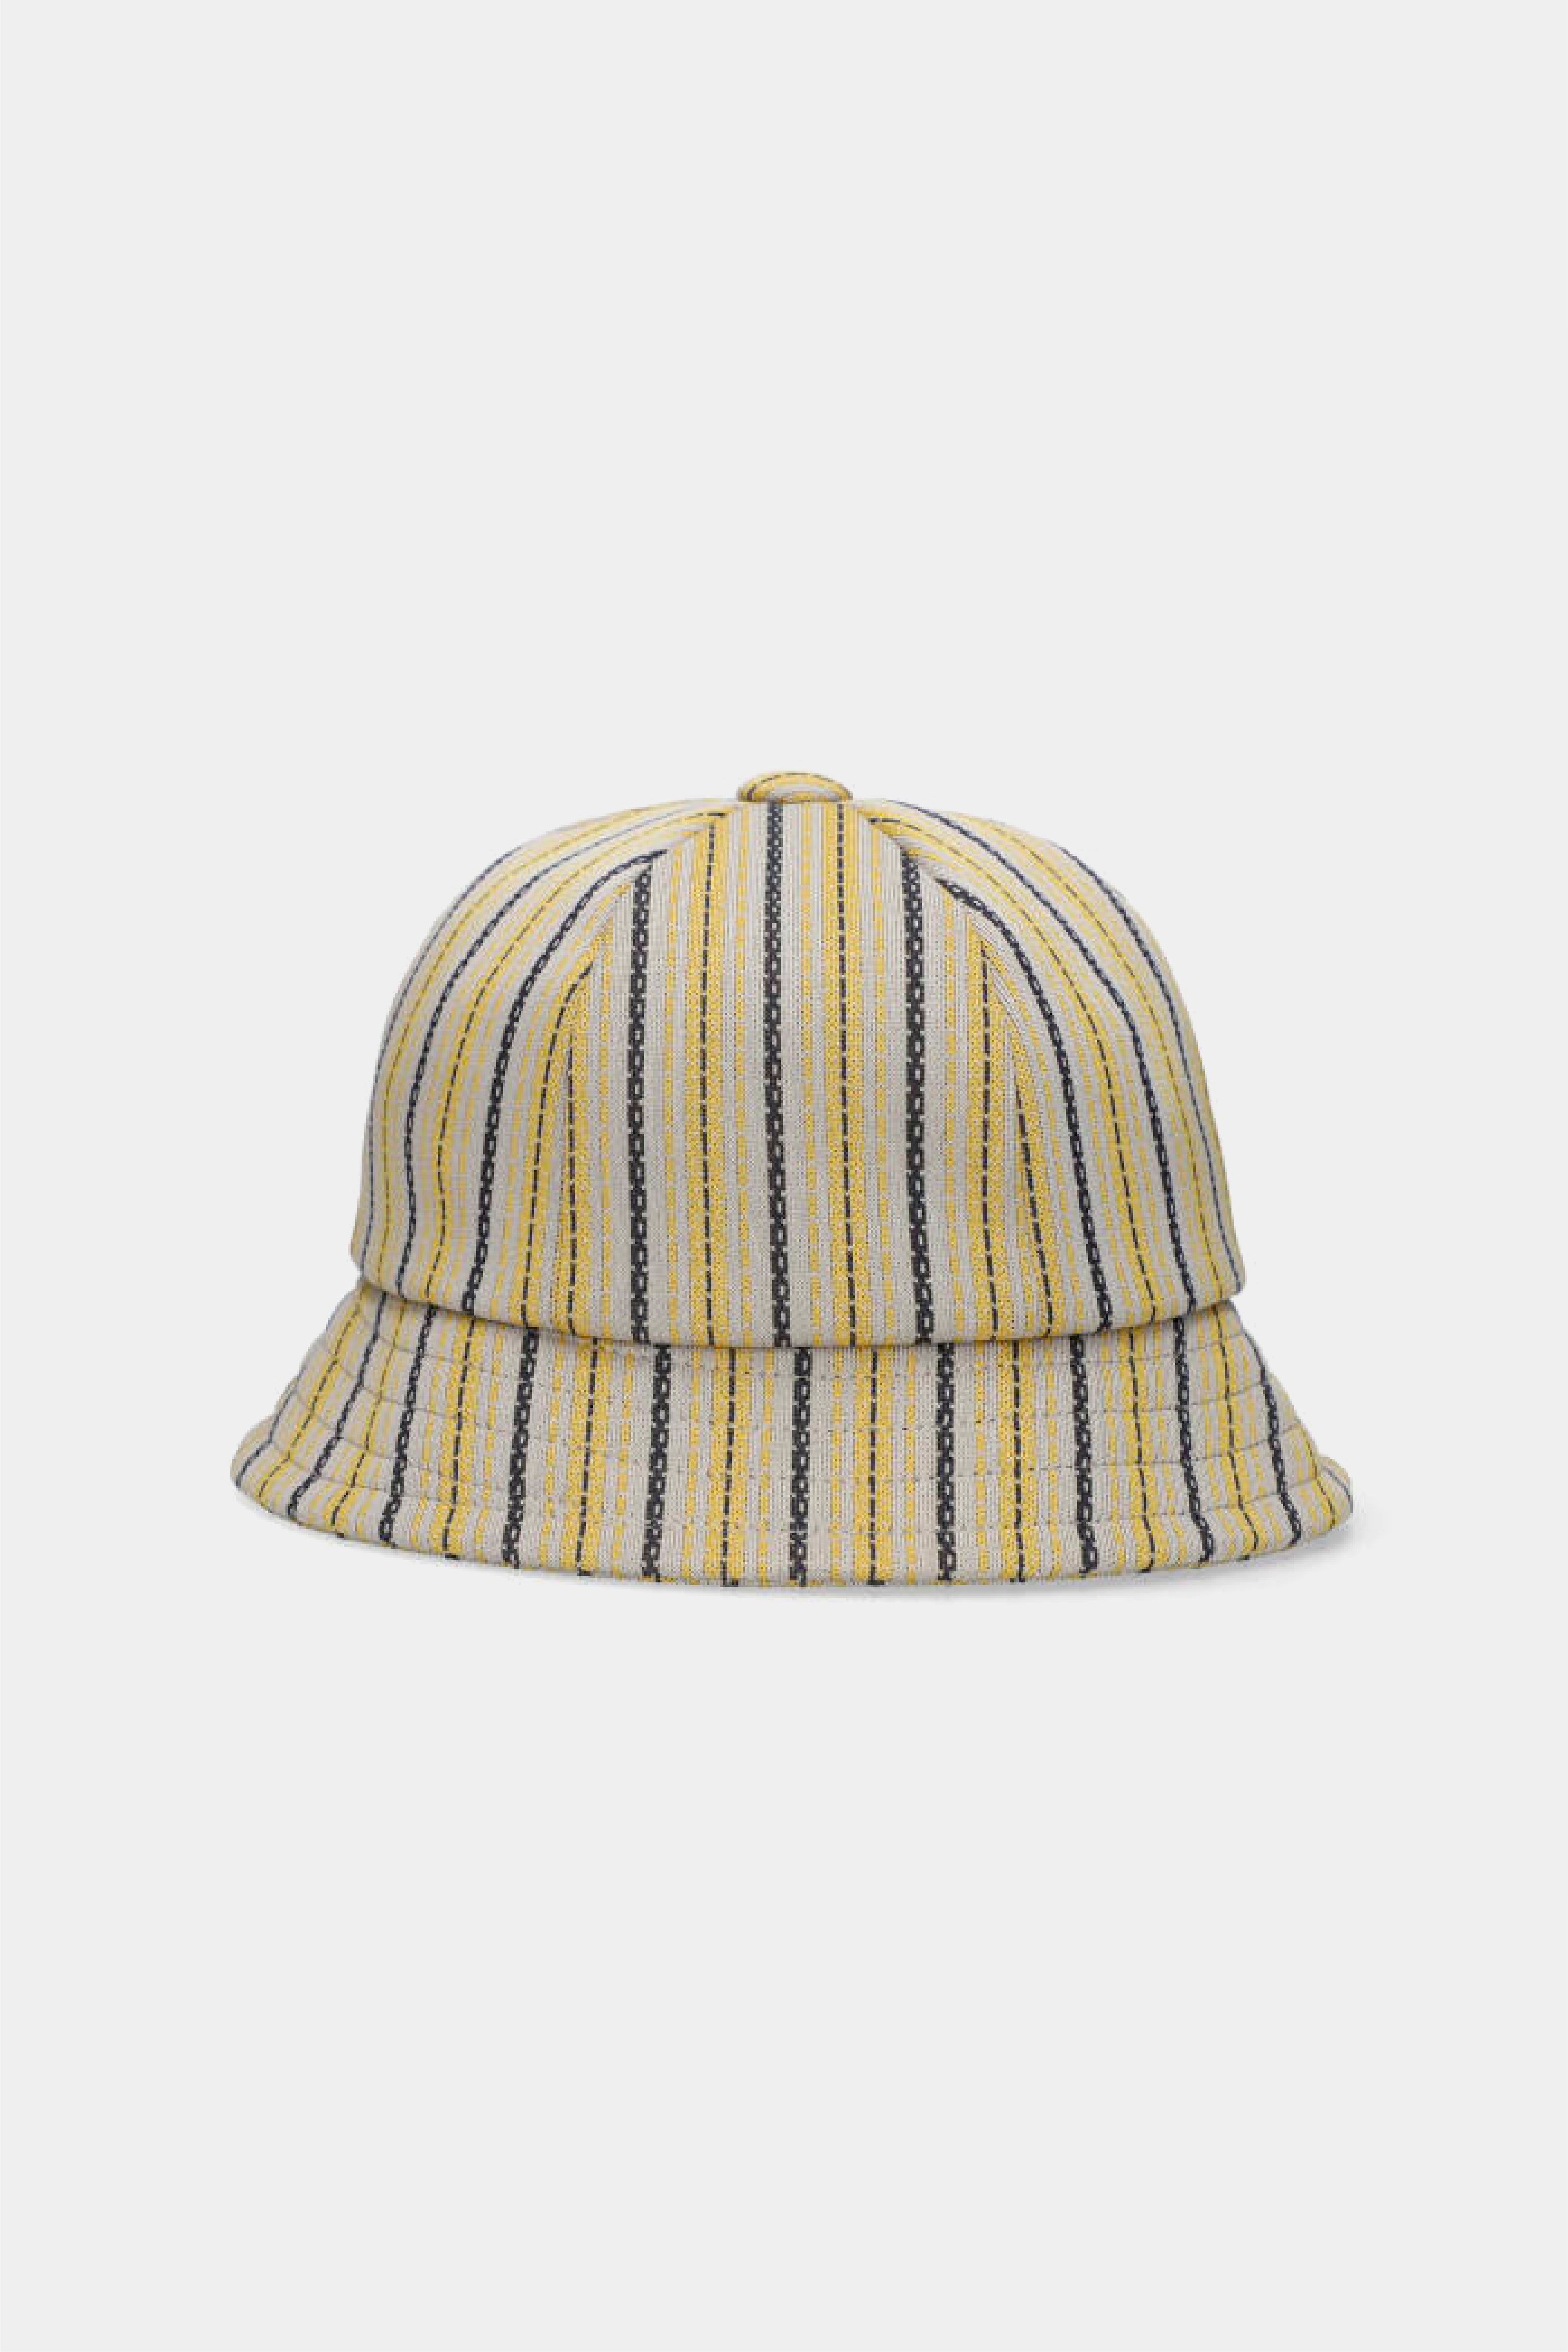 Selectshop FRAME - NEEDLES Bermuda Hat Stripe All-accessories Concept Store Dubai